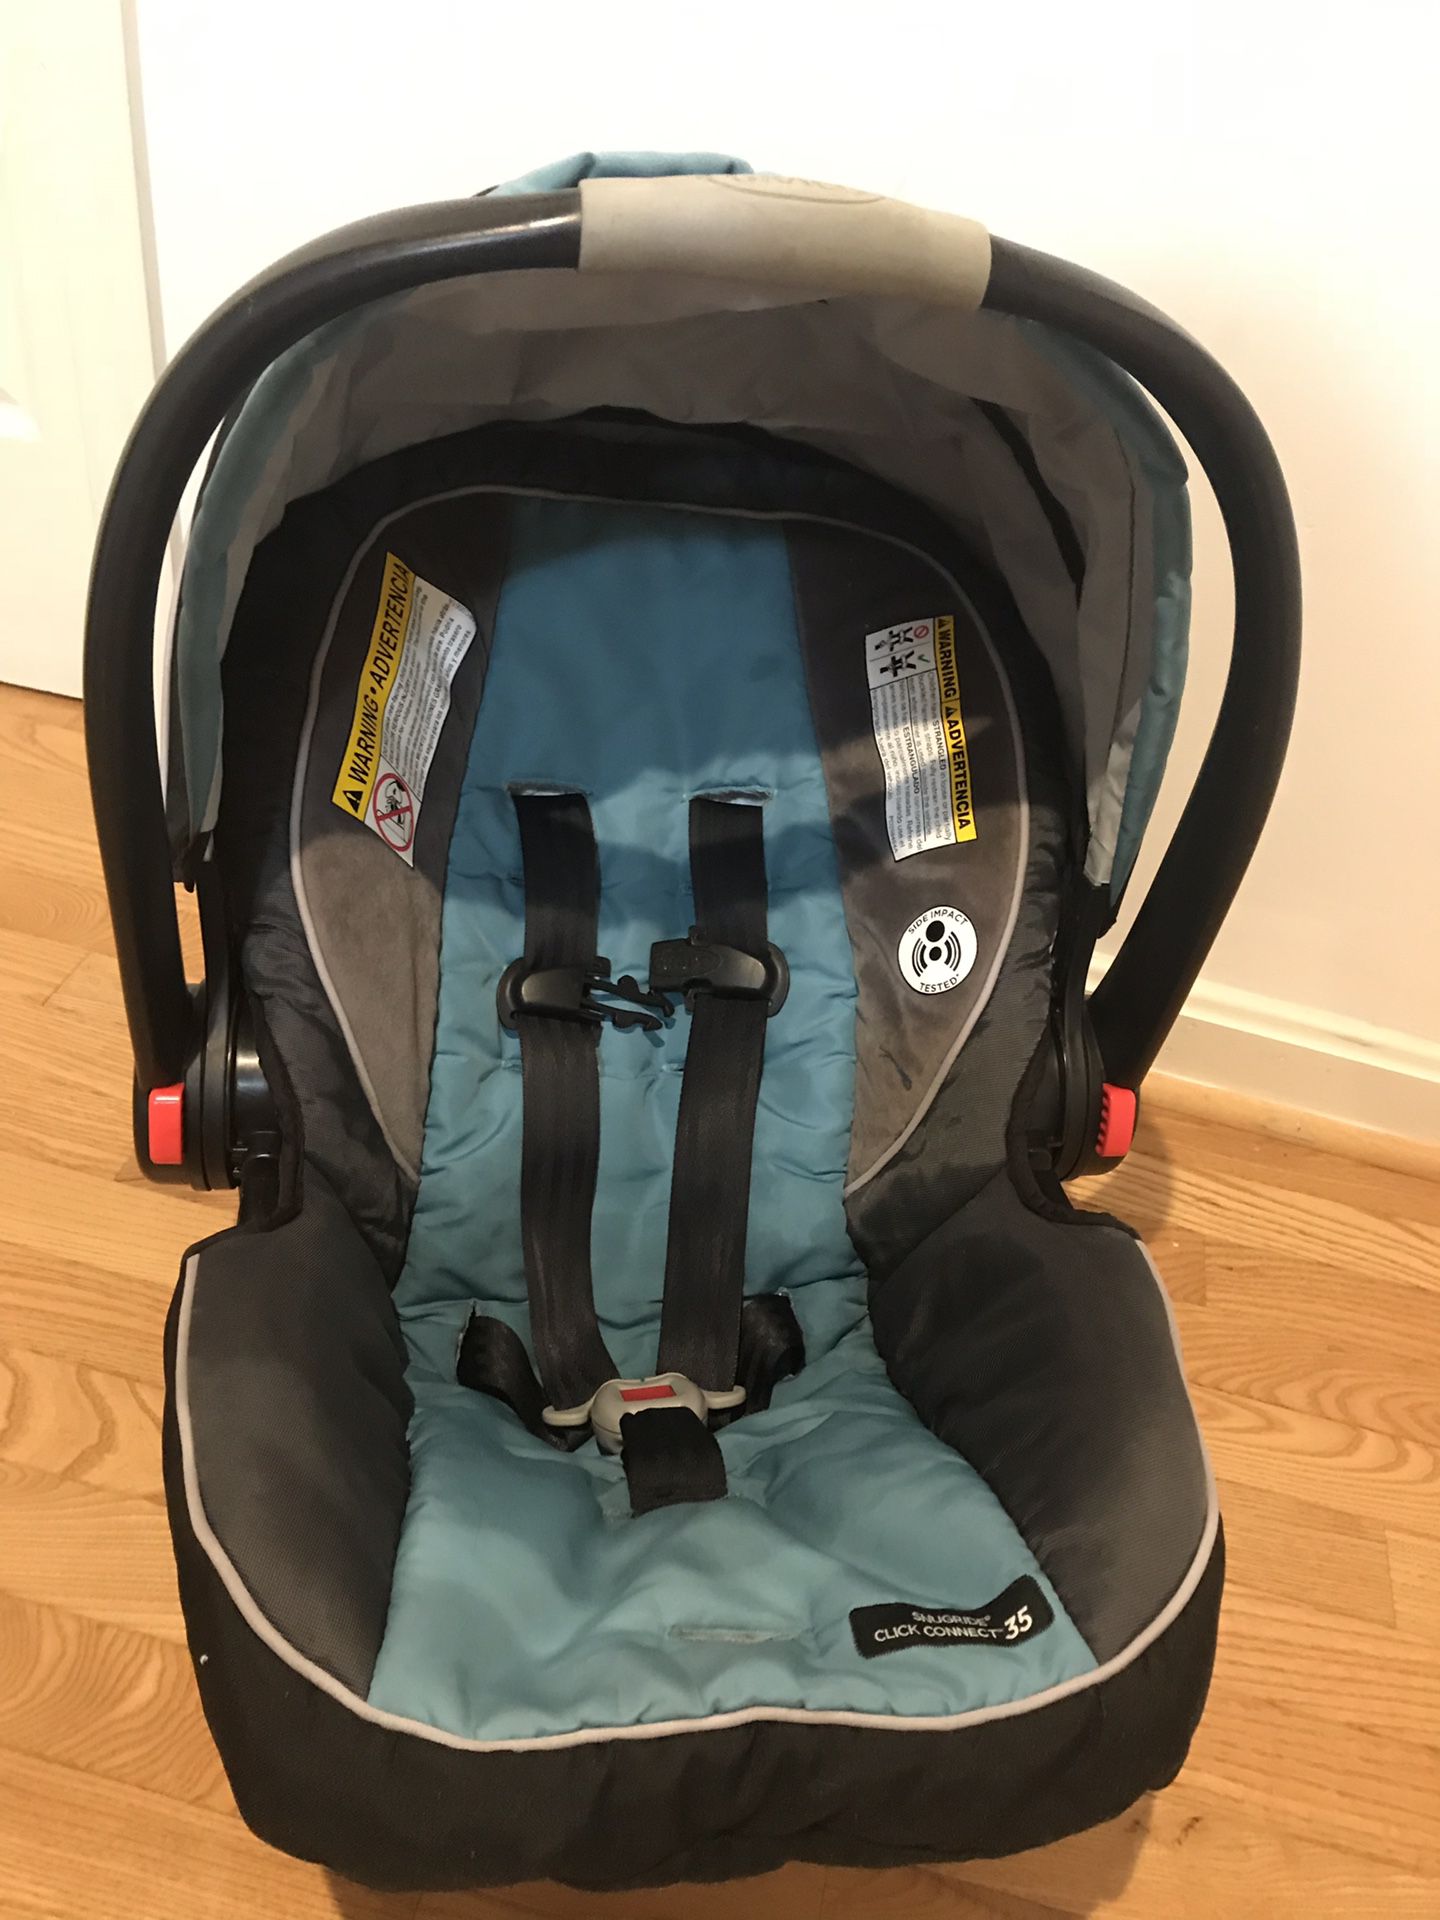 Craigo infant Car seat and stroller